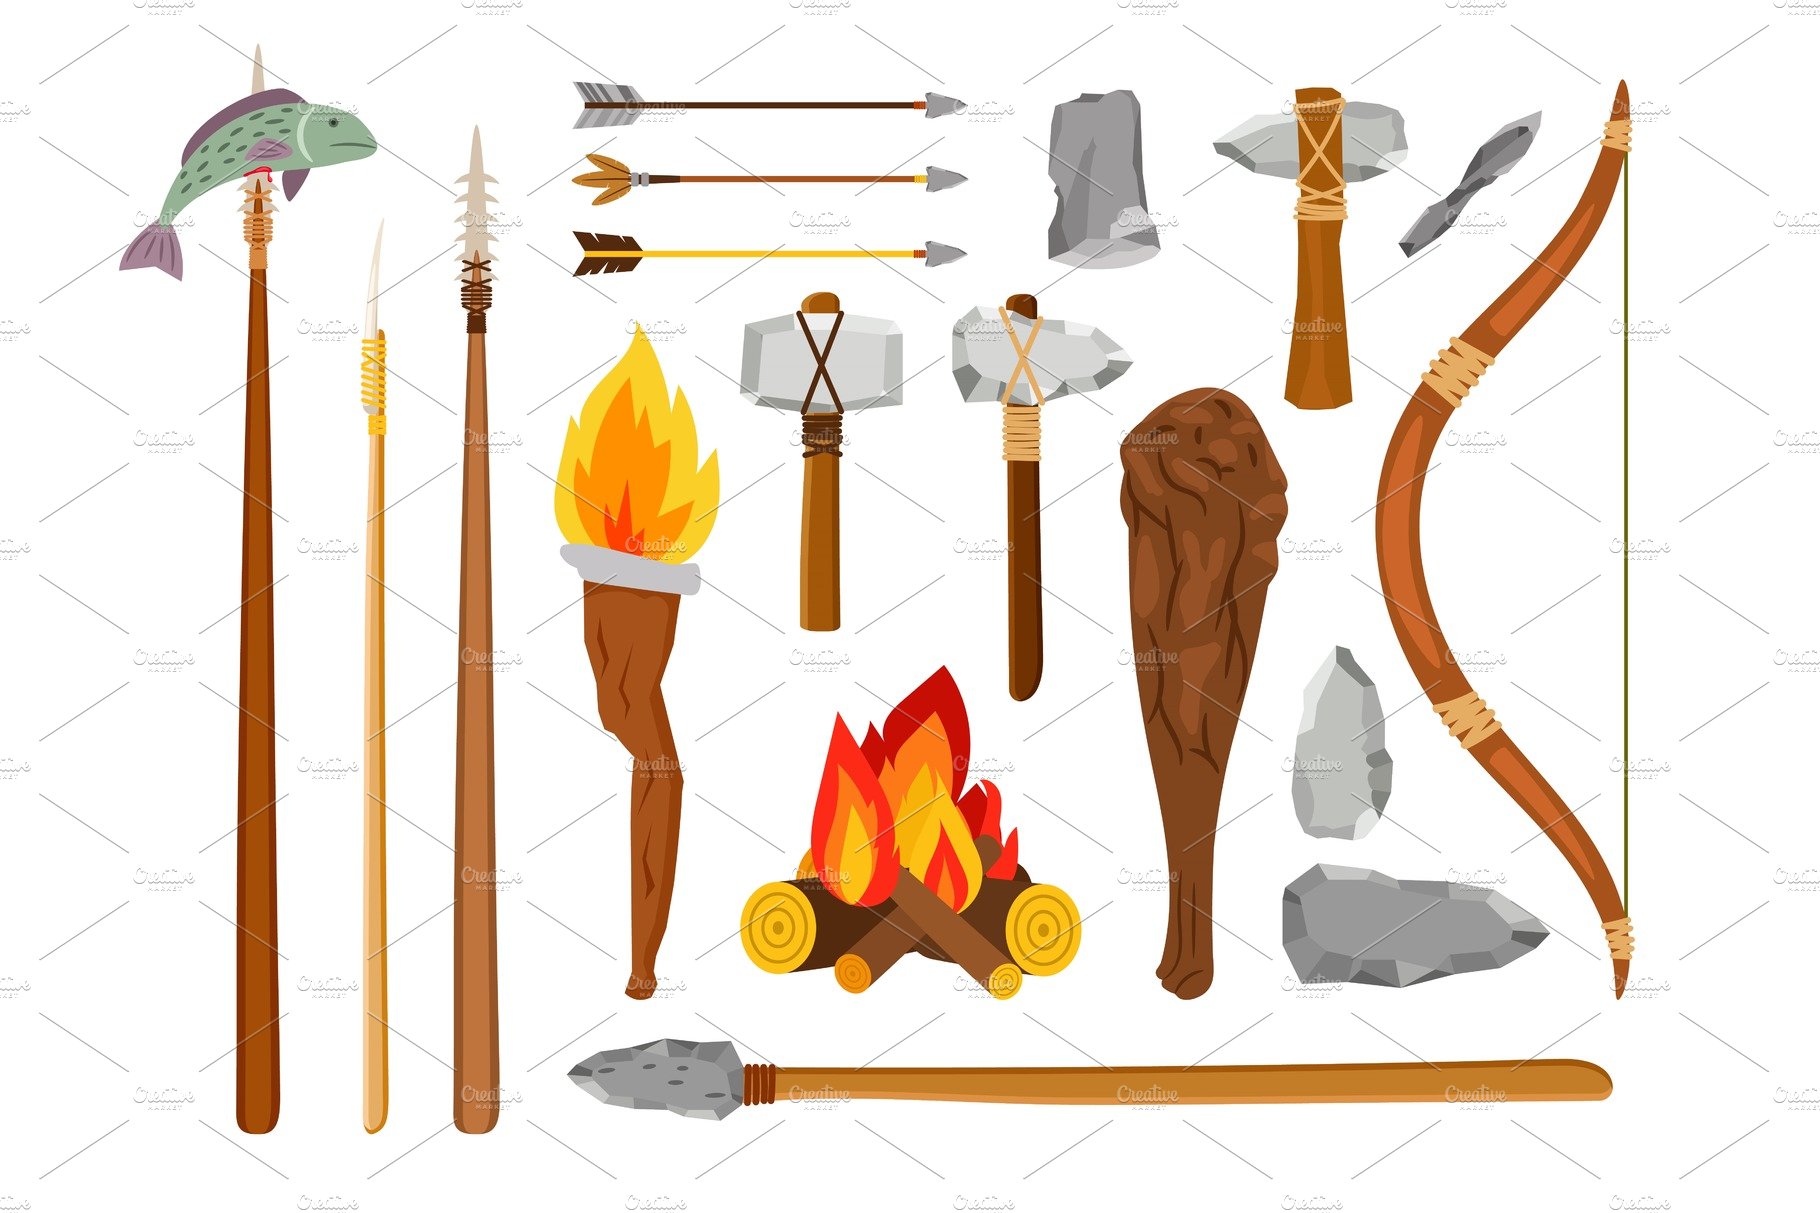 Cartoon stone age tools cover image.